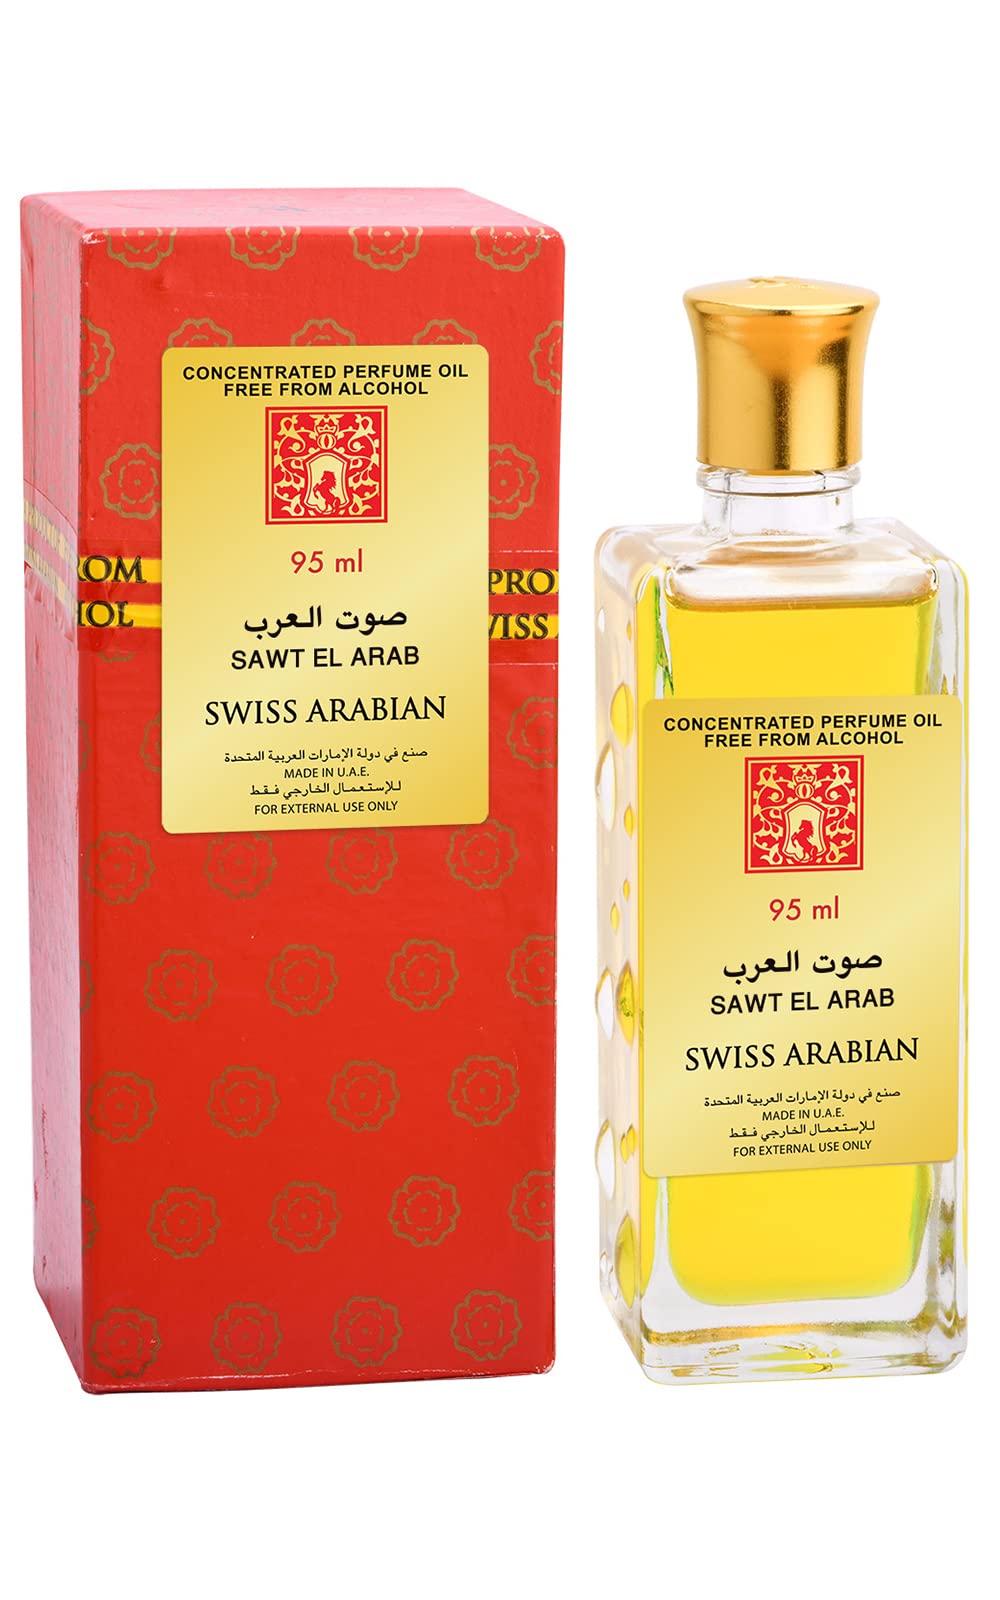 Swiss Arabian Sawt El Arab 95ml Concentrated Perfume Oil